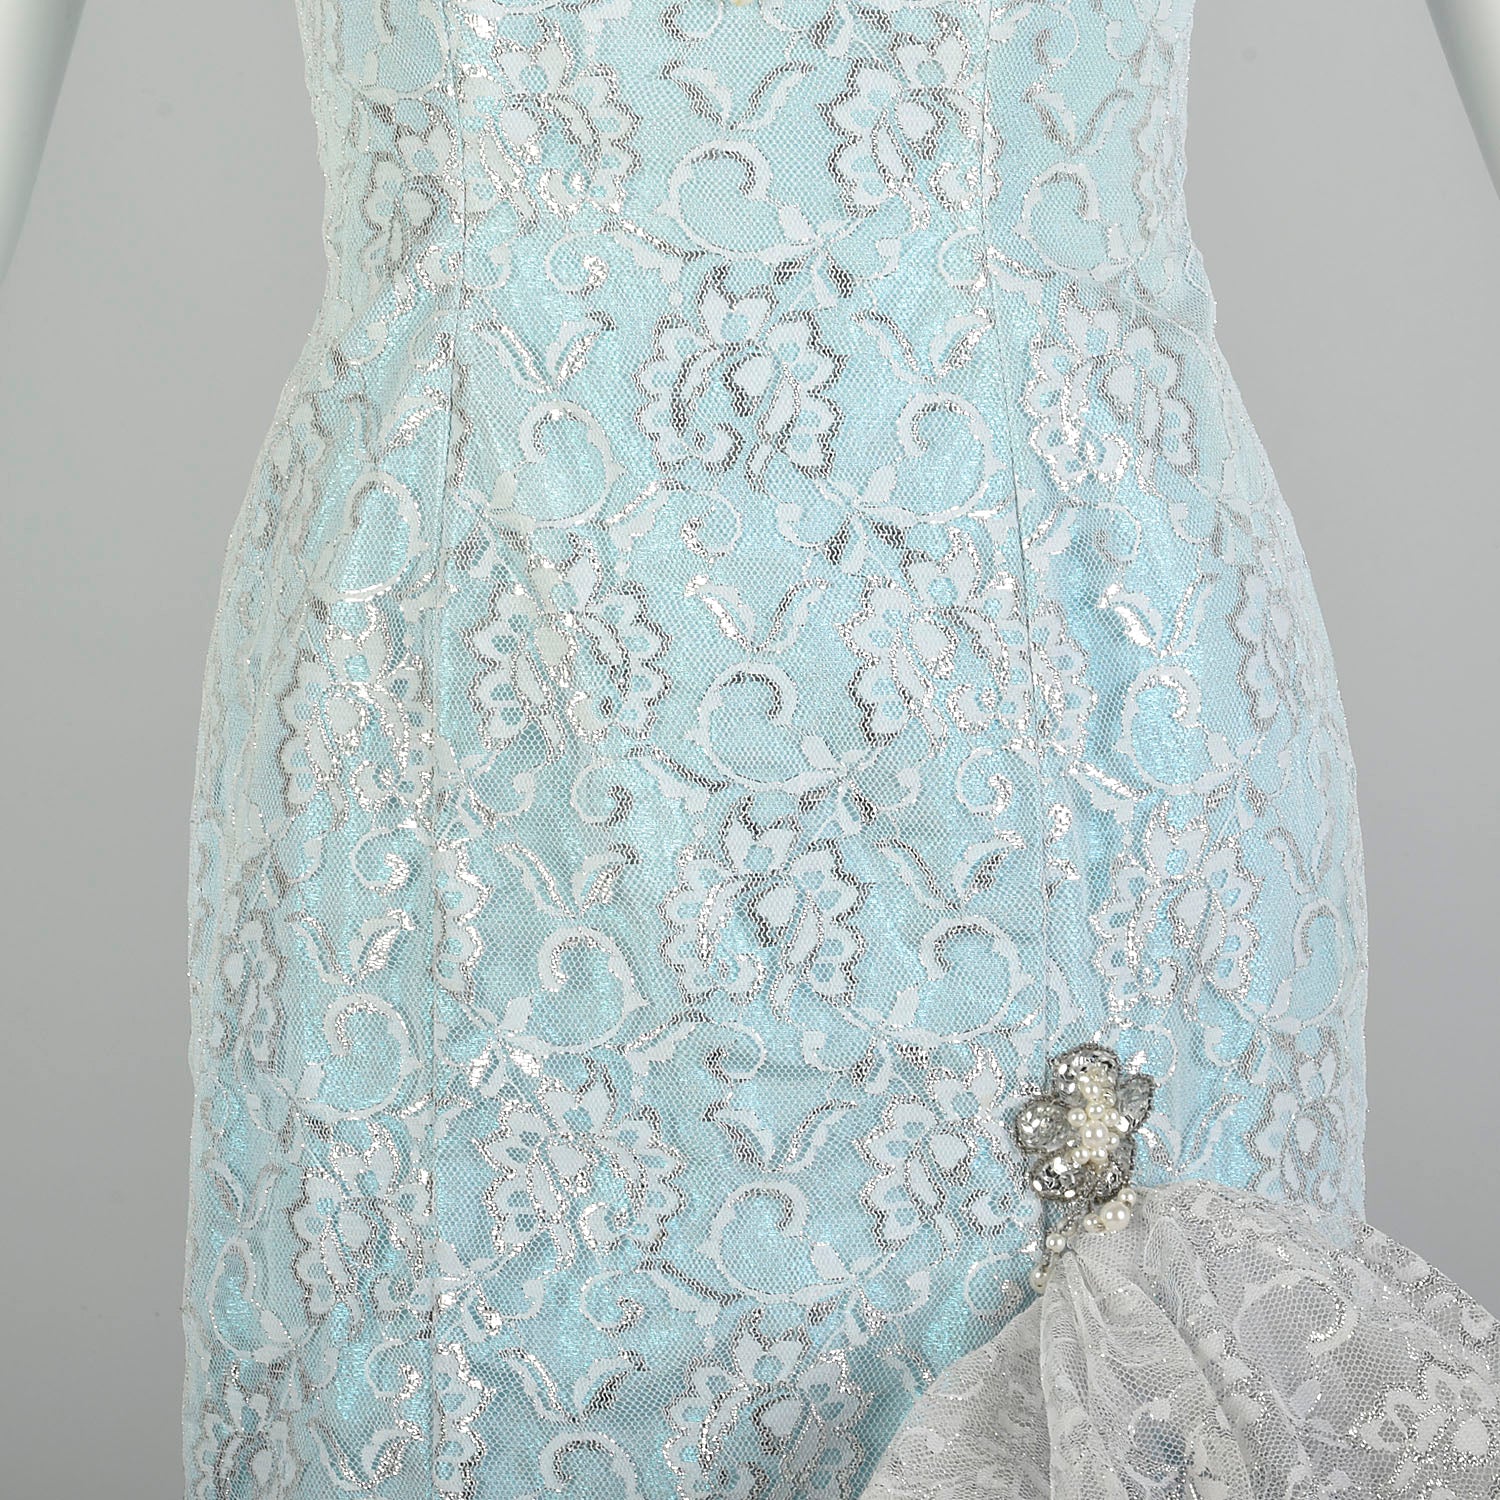 Small 1980s Blue Silver Sleeveless Layered Lace Asymmetric Calypso Mermaid Prom Dress